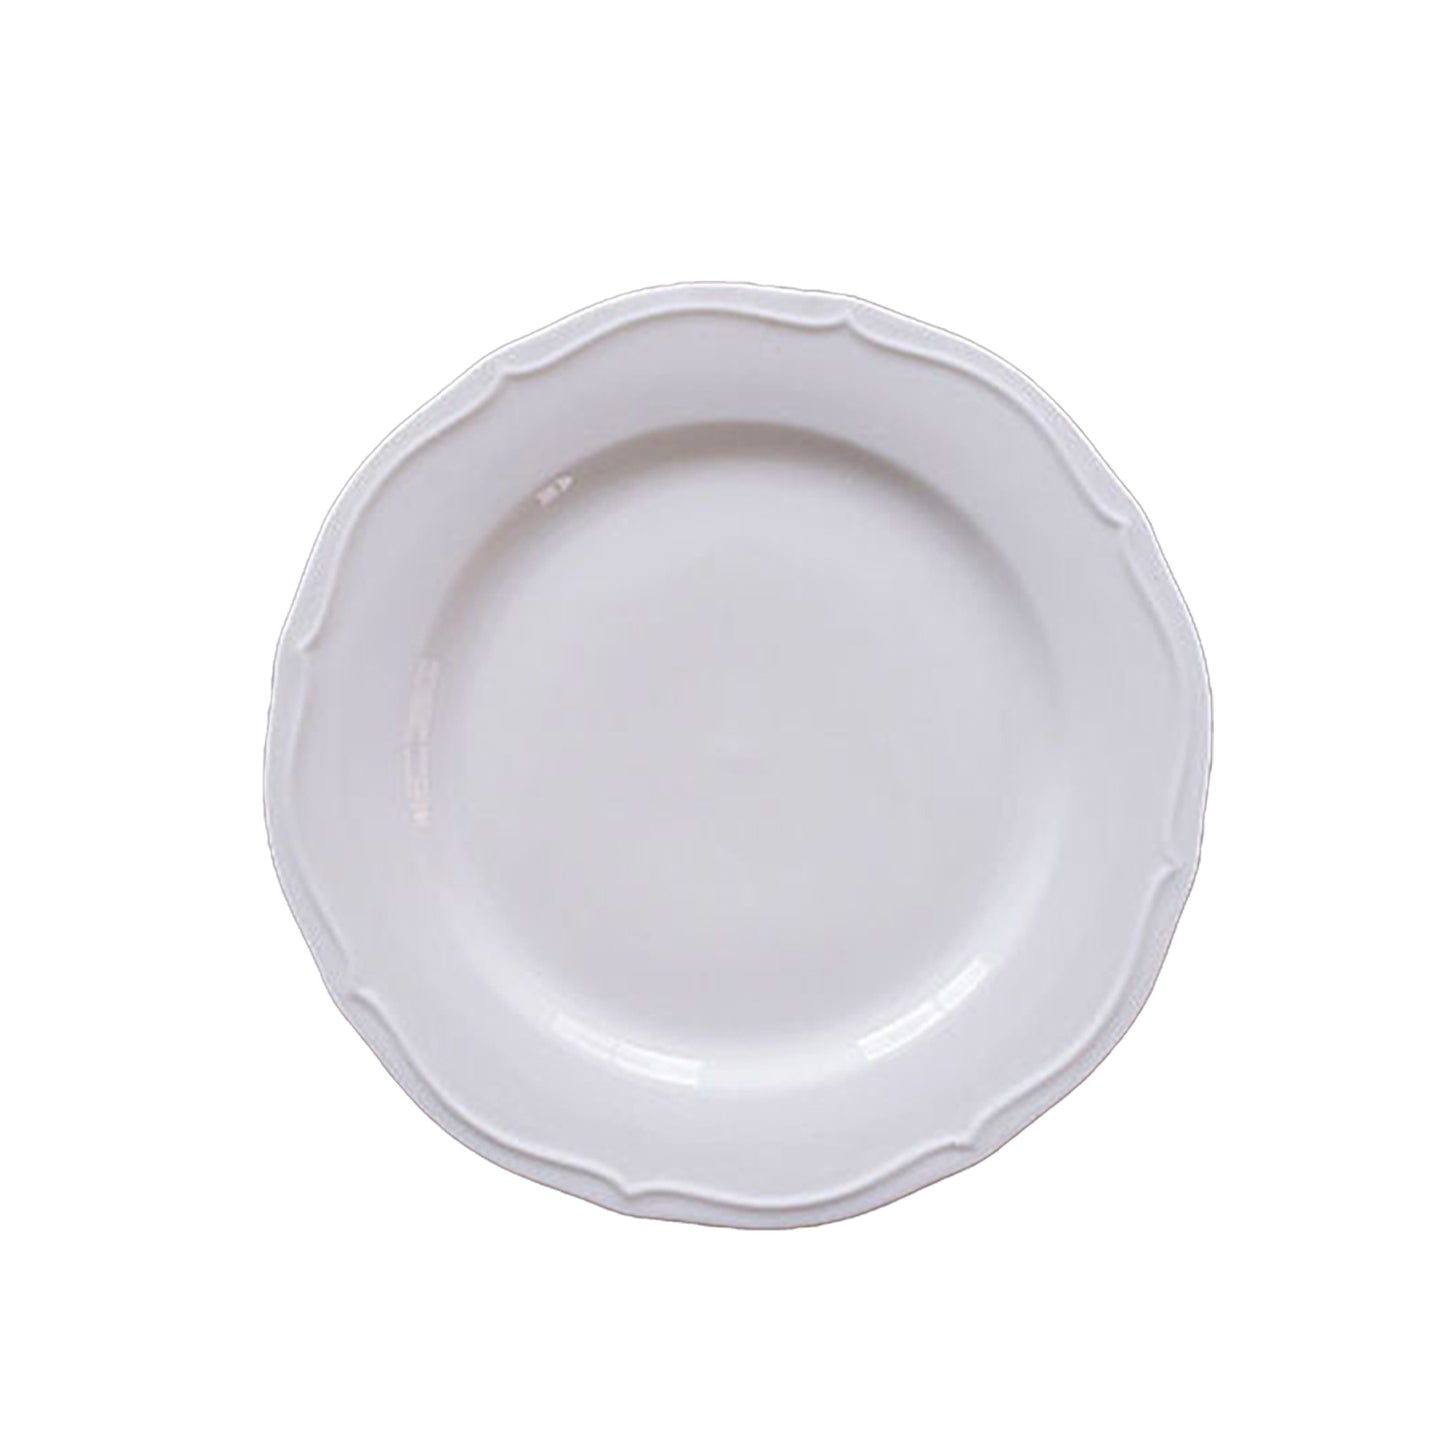 White Embossed Plates